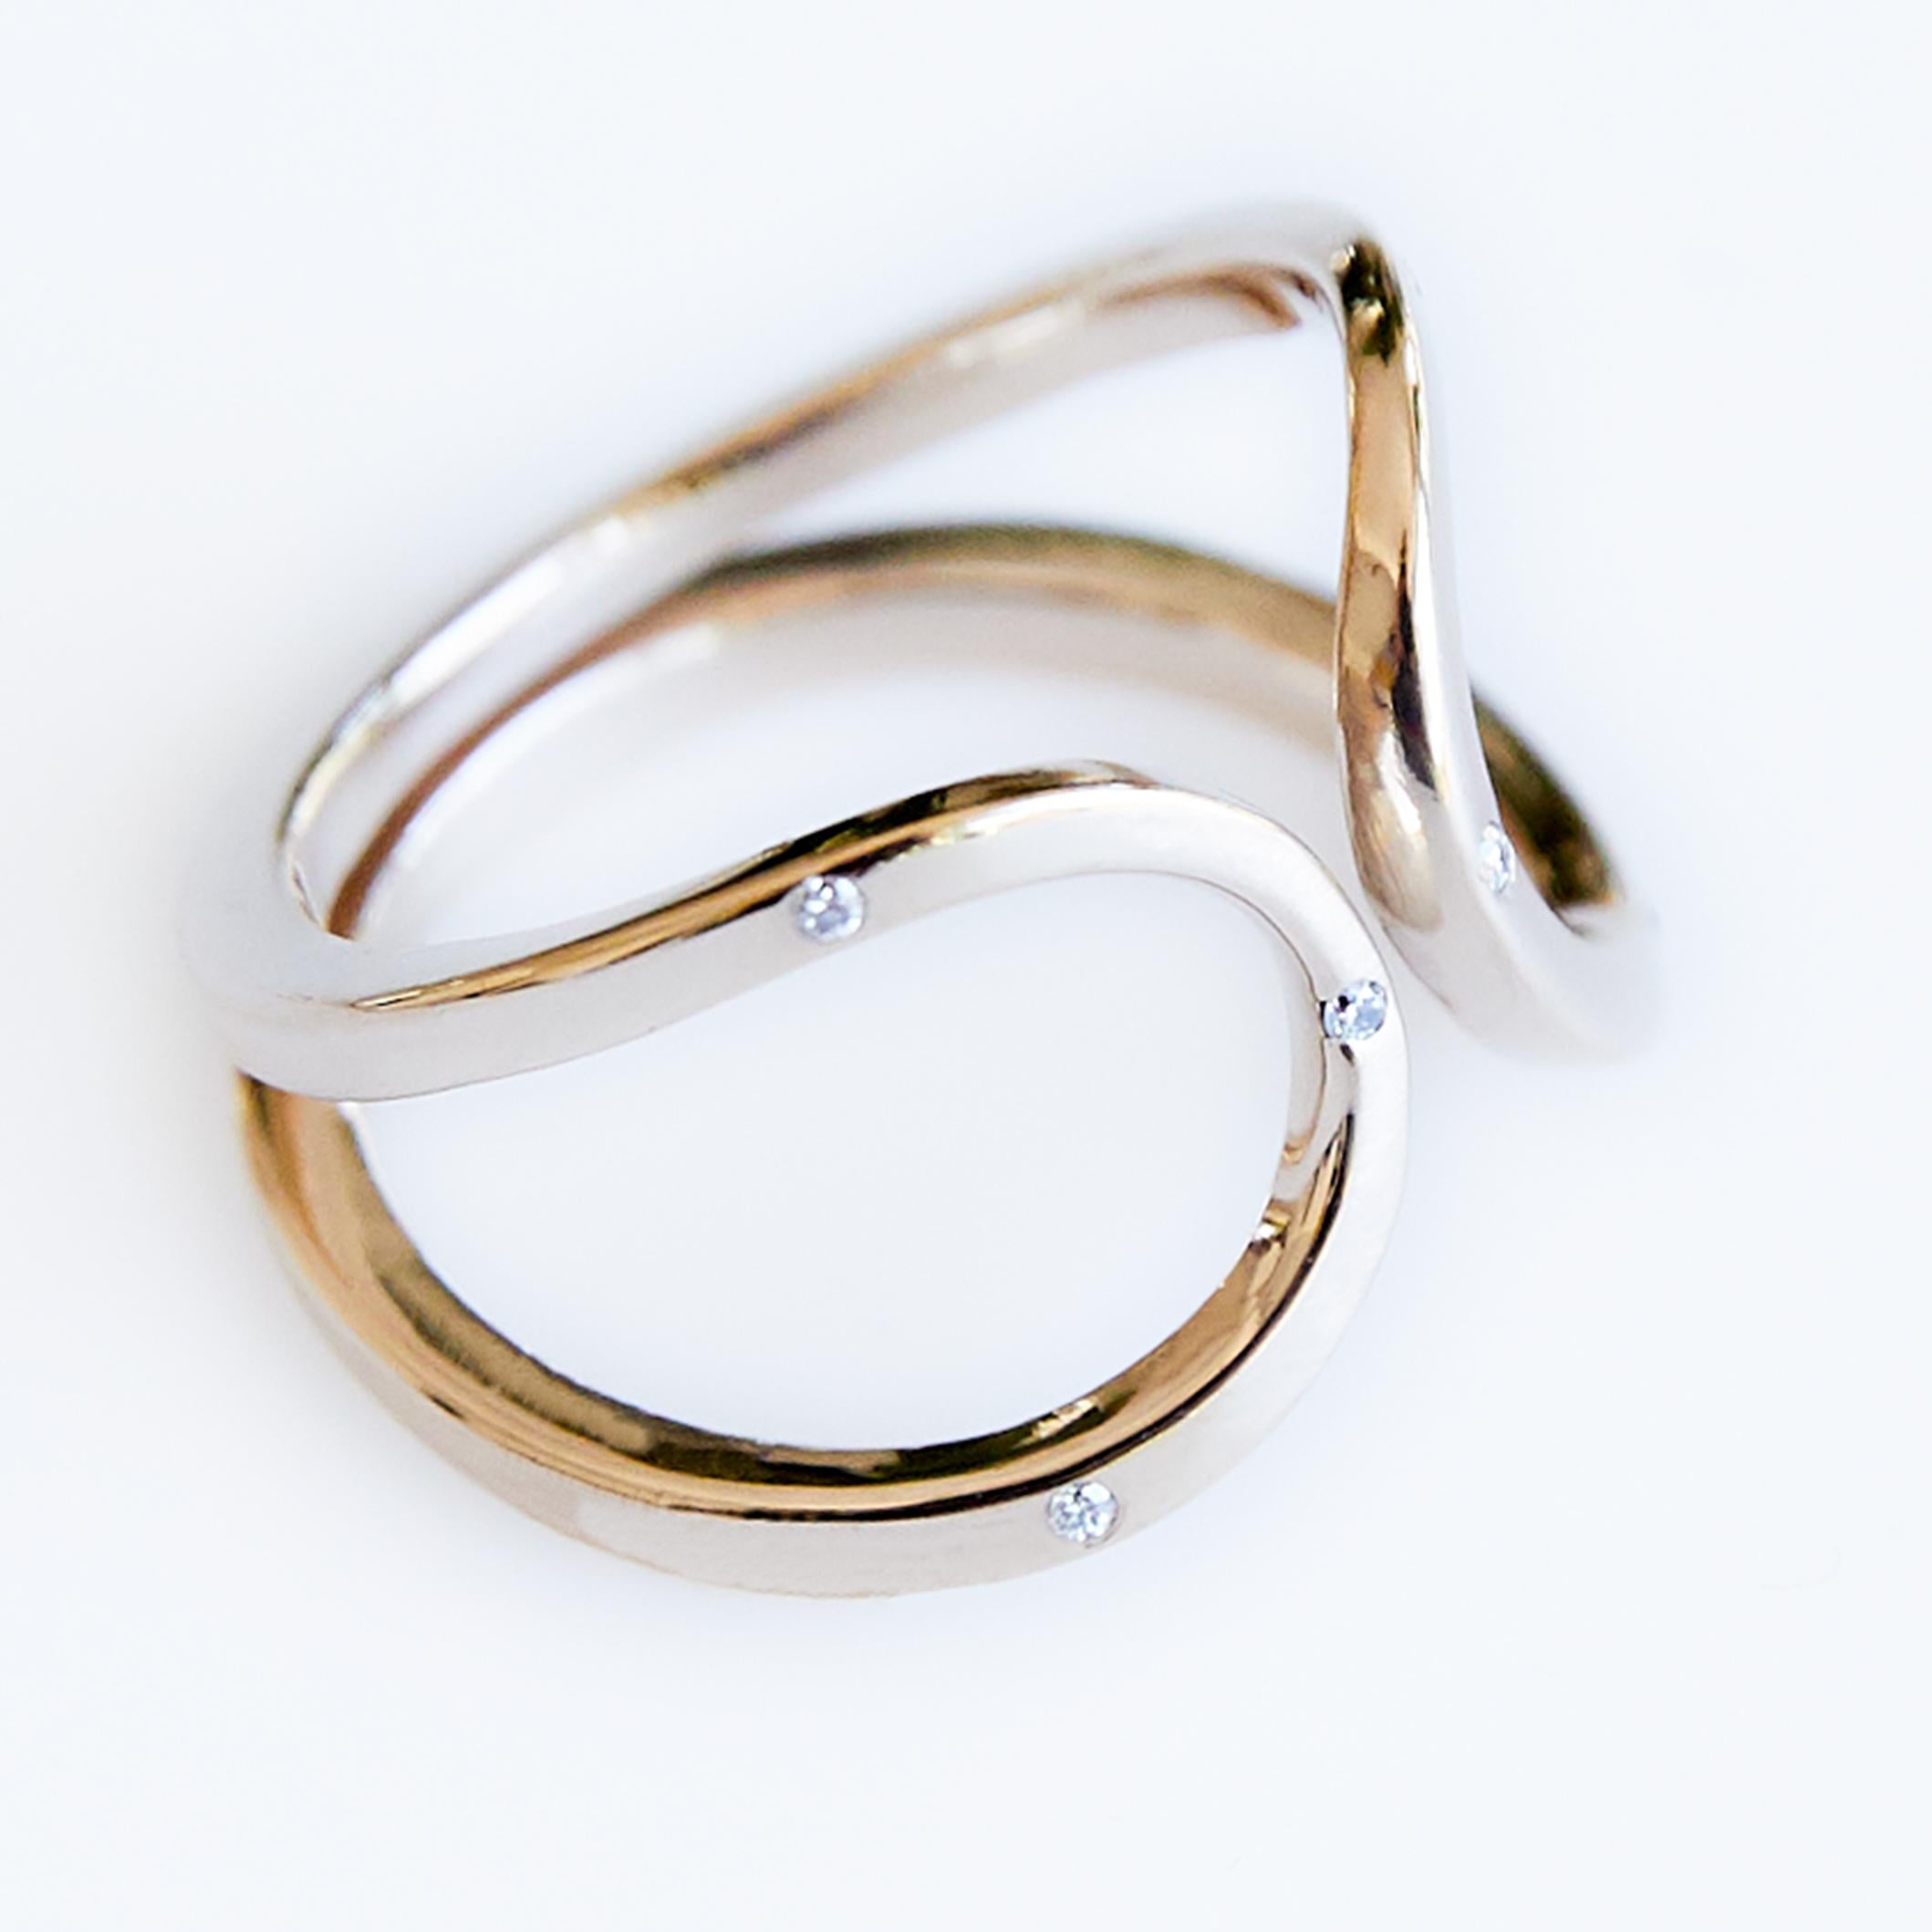 White Diamond Ring Gold Vermeil Fashion Cocktail Ring Adjustable J Dauphin
J DAUPHIN 